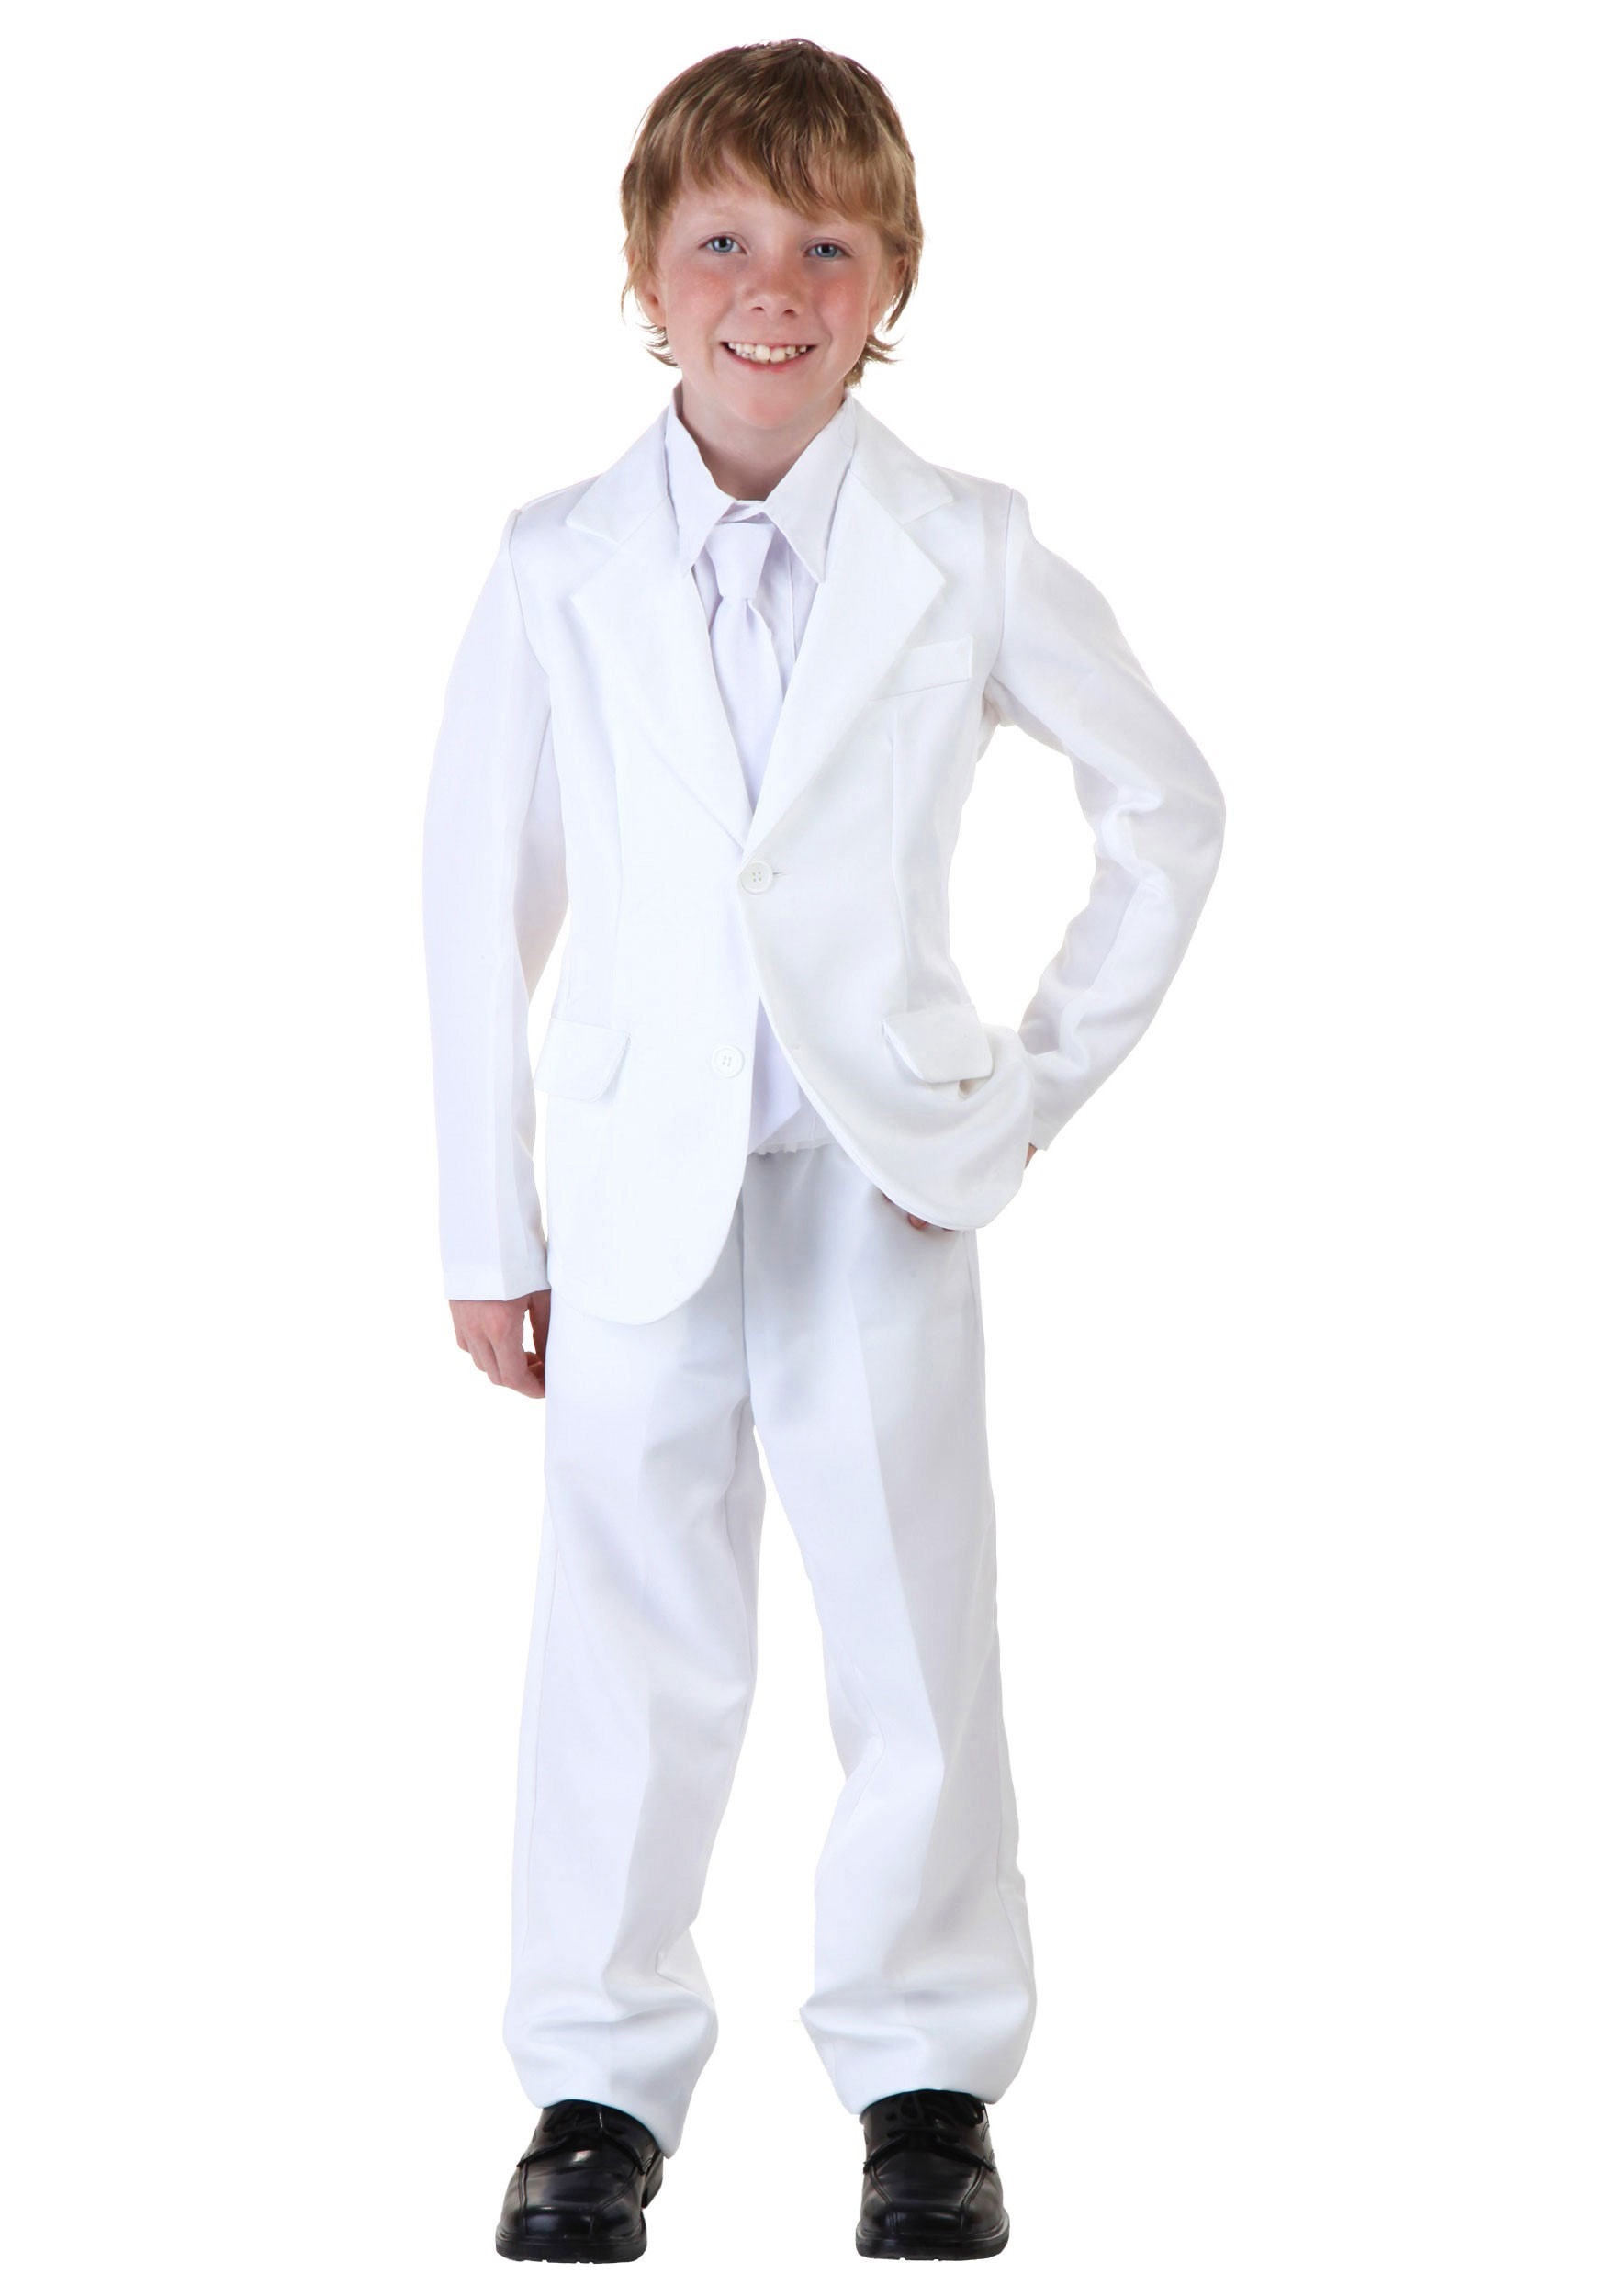 Photos - Fancy Dress FUN Costumes Child White Suit Costume